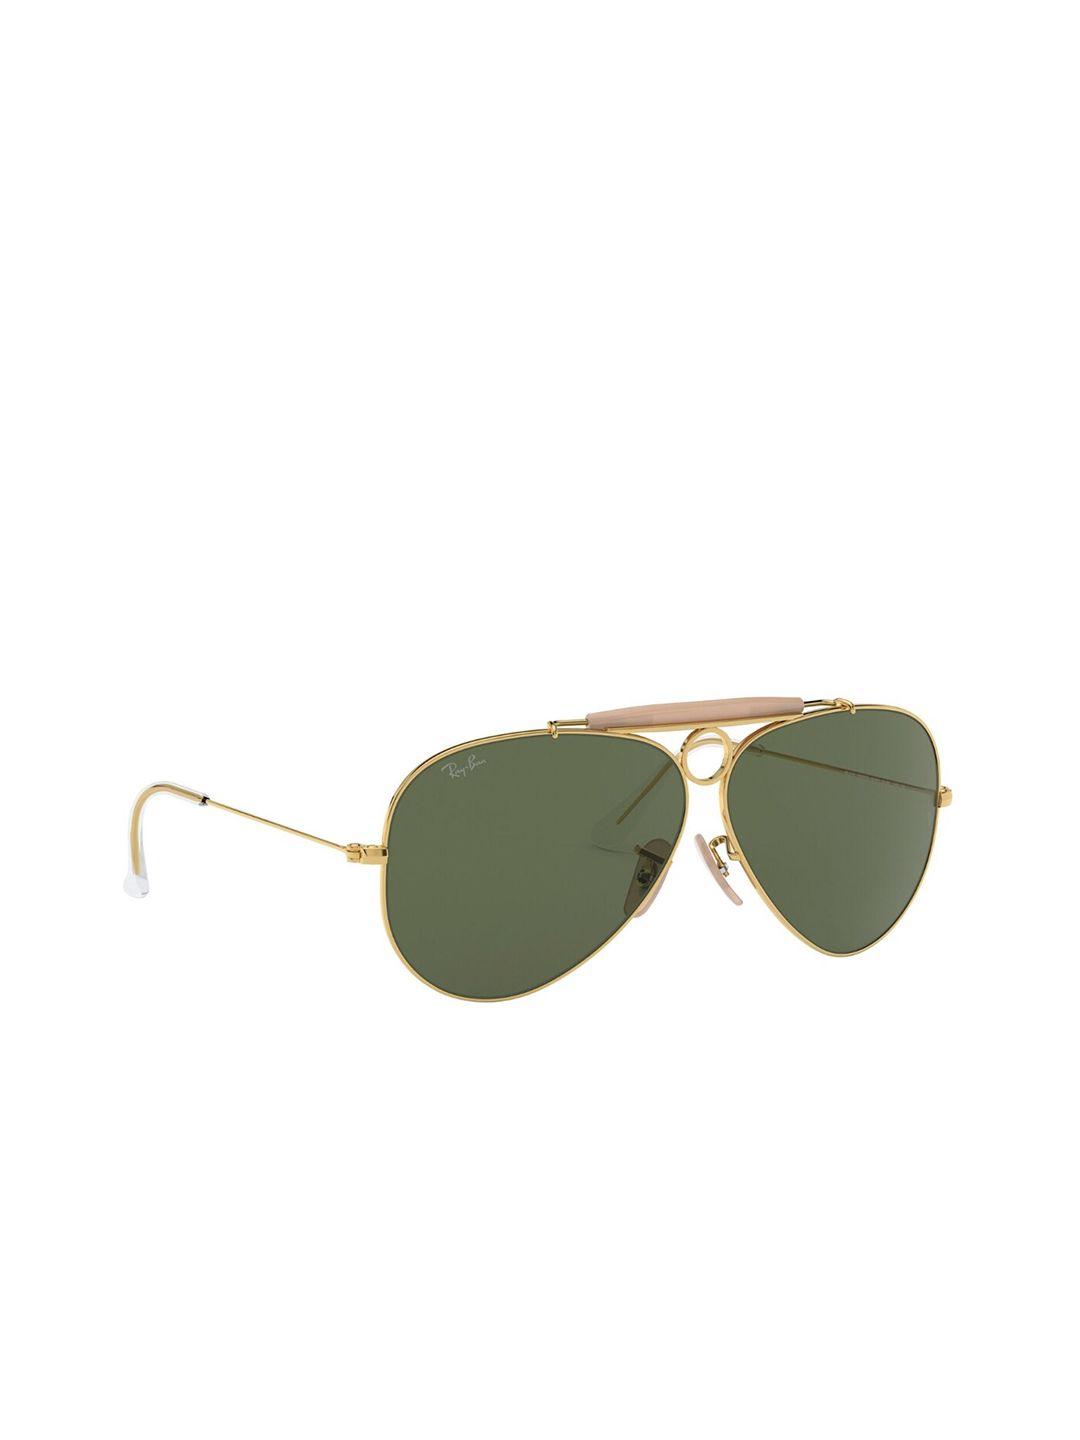 ray-ban unisex green lens & gold-toned aviator uv protected lens sunglasses